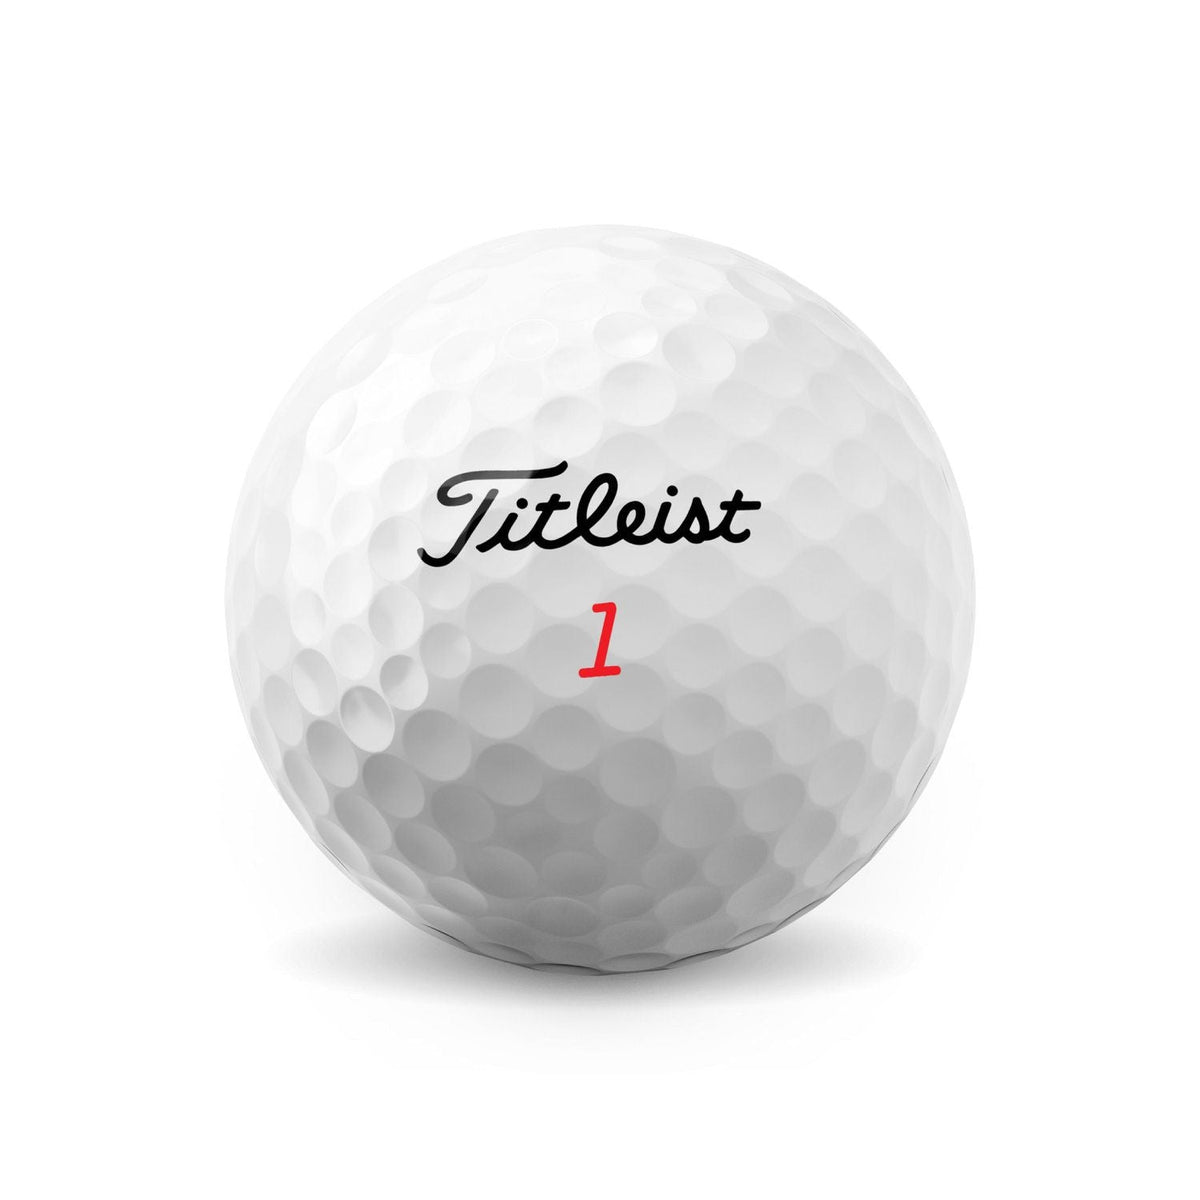 Titleist trufeel golfballen 2023 wit